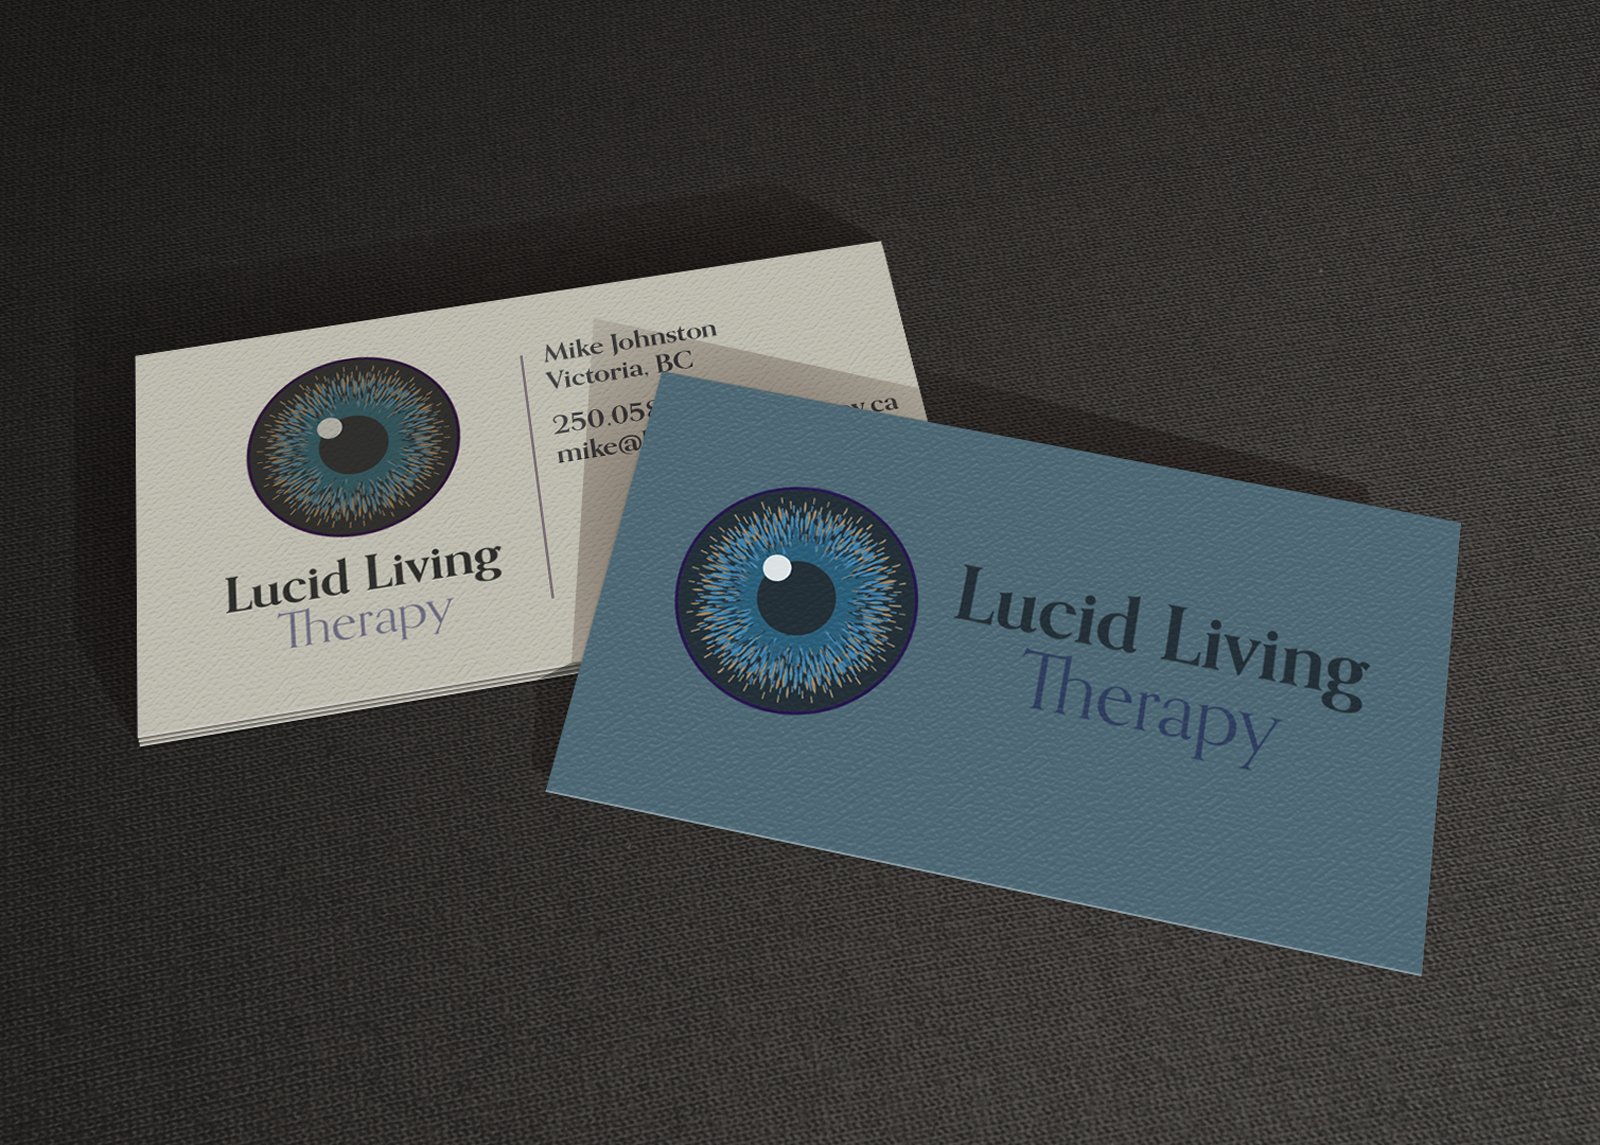 Logo Design: Lucid living Therapy, Victoria BC